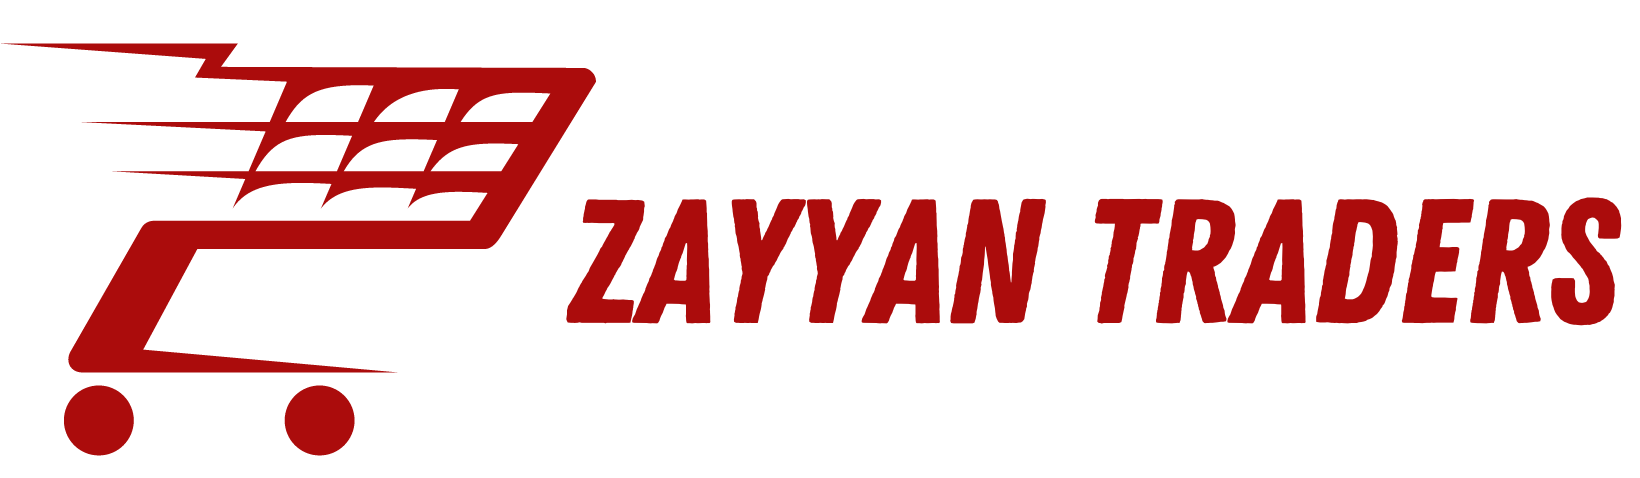 Zayyan Traders